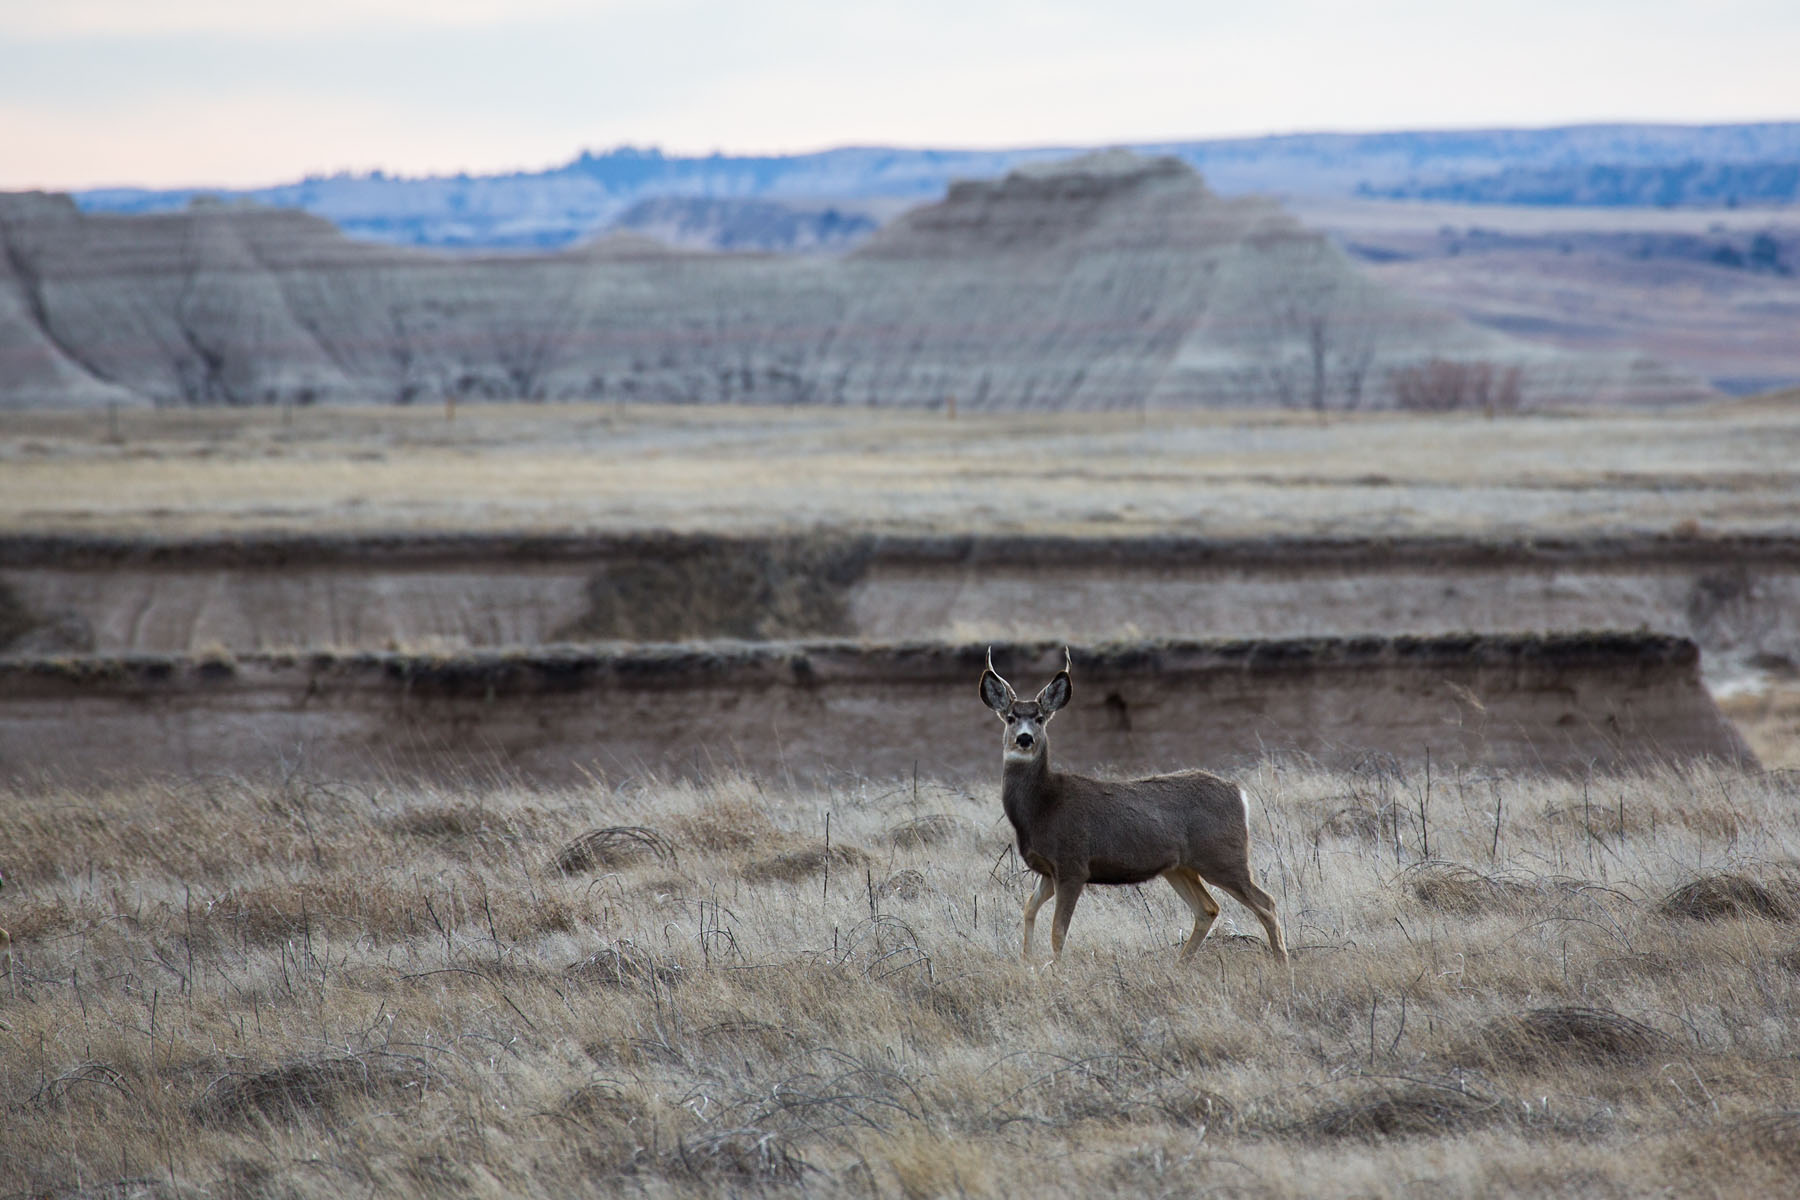 Deer, Badlands National Park, South Dakota.  Click for next photo.